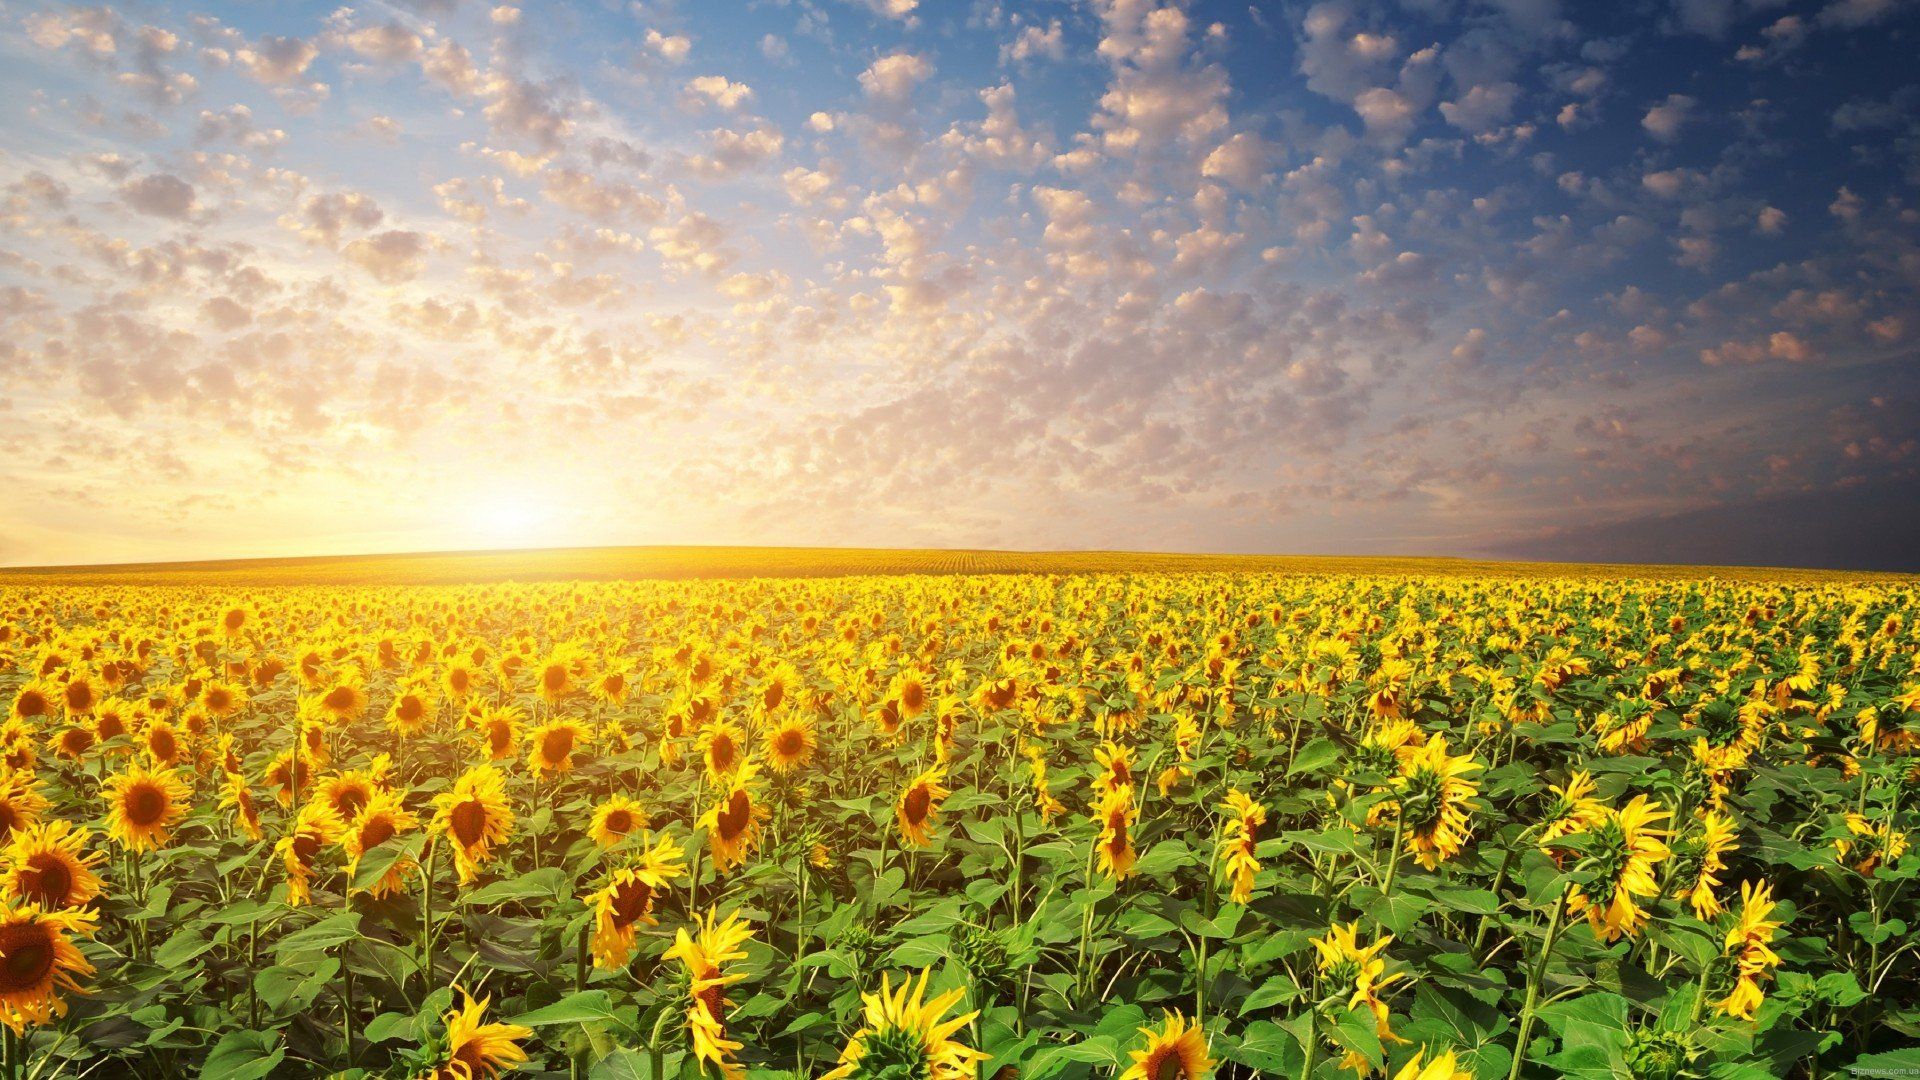 Sunflower Field wallpaper picture